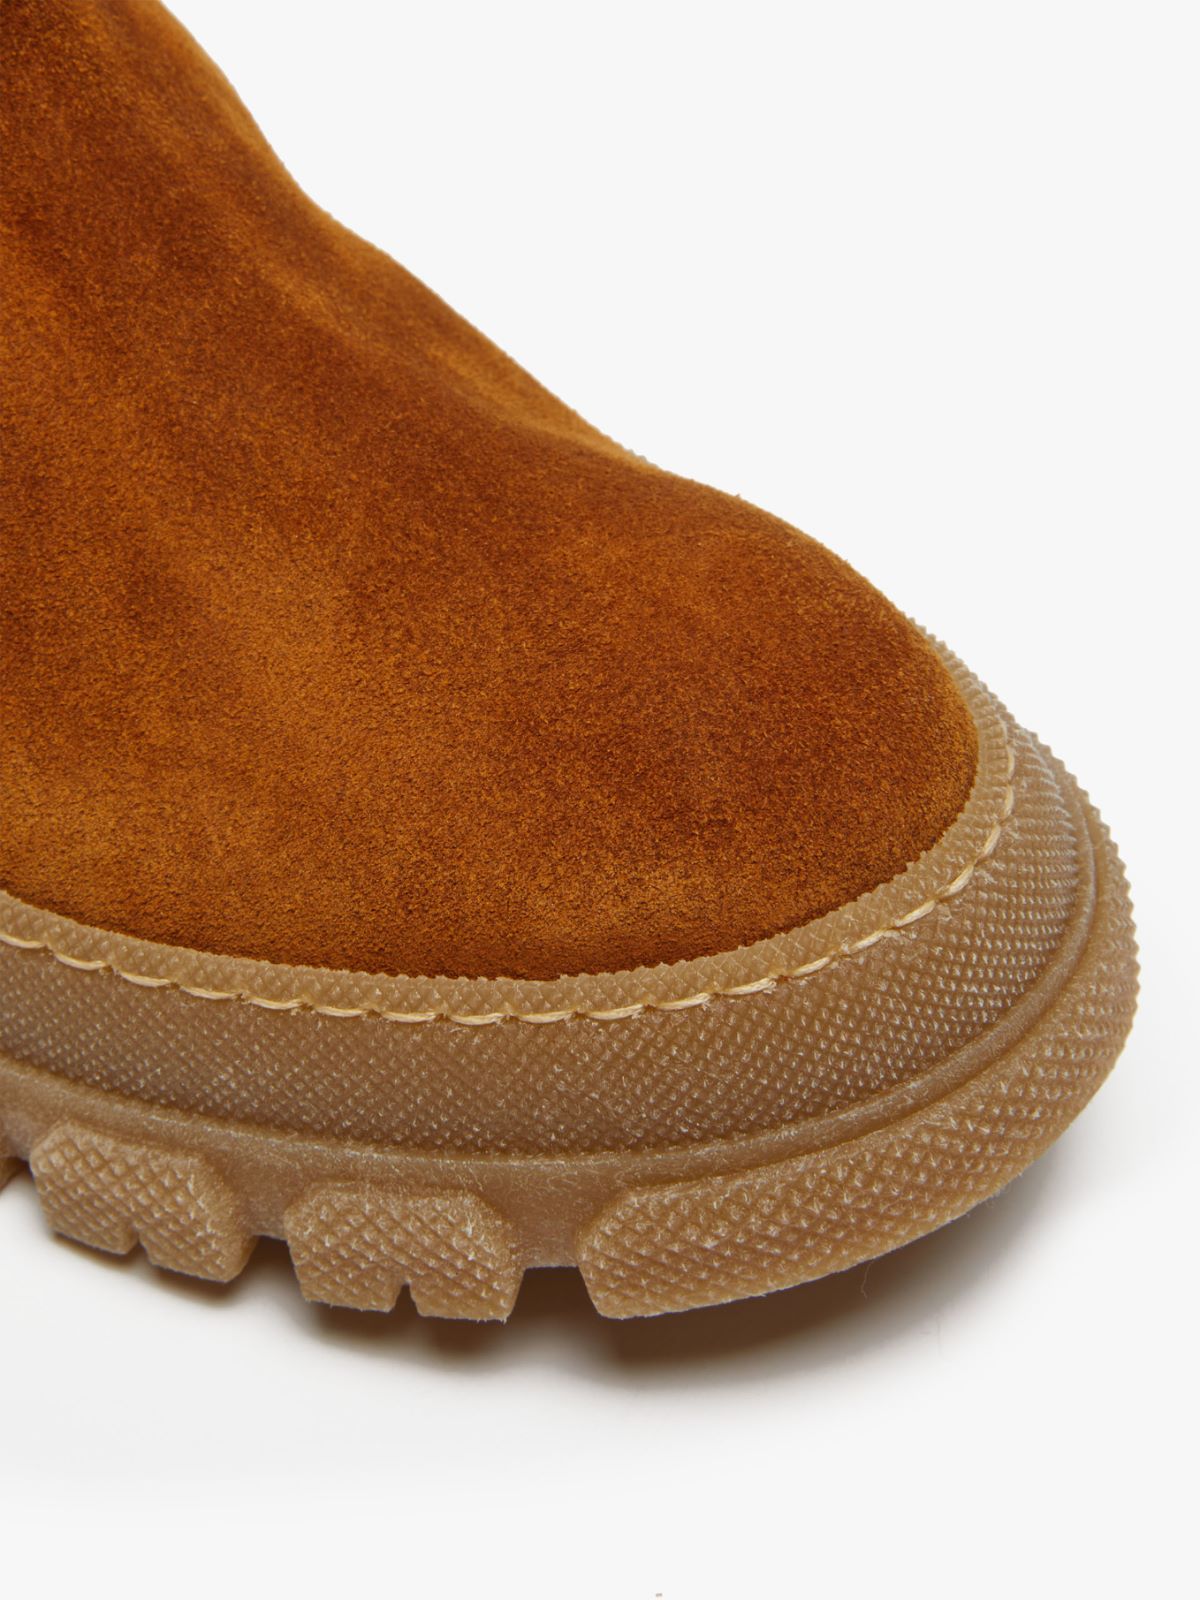 Split leather boots - TOBACCO - Weekend Max Mara - 5